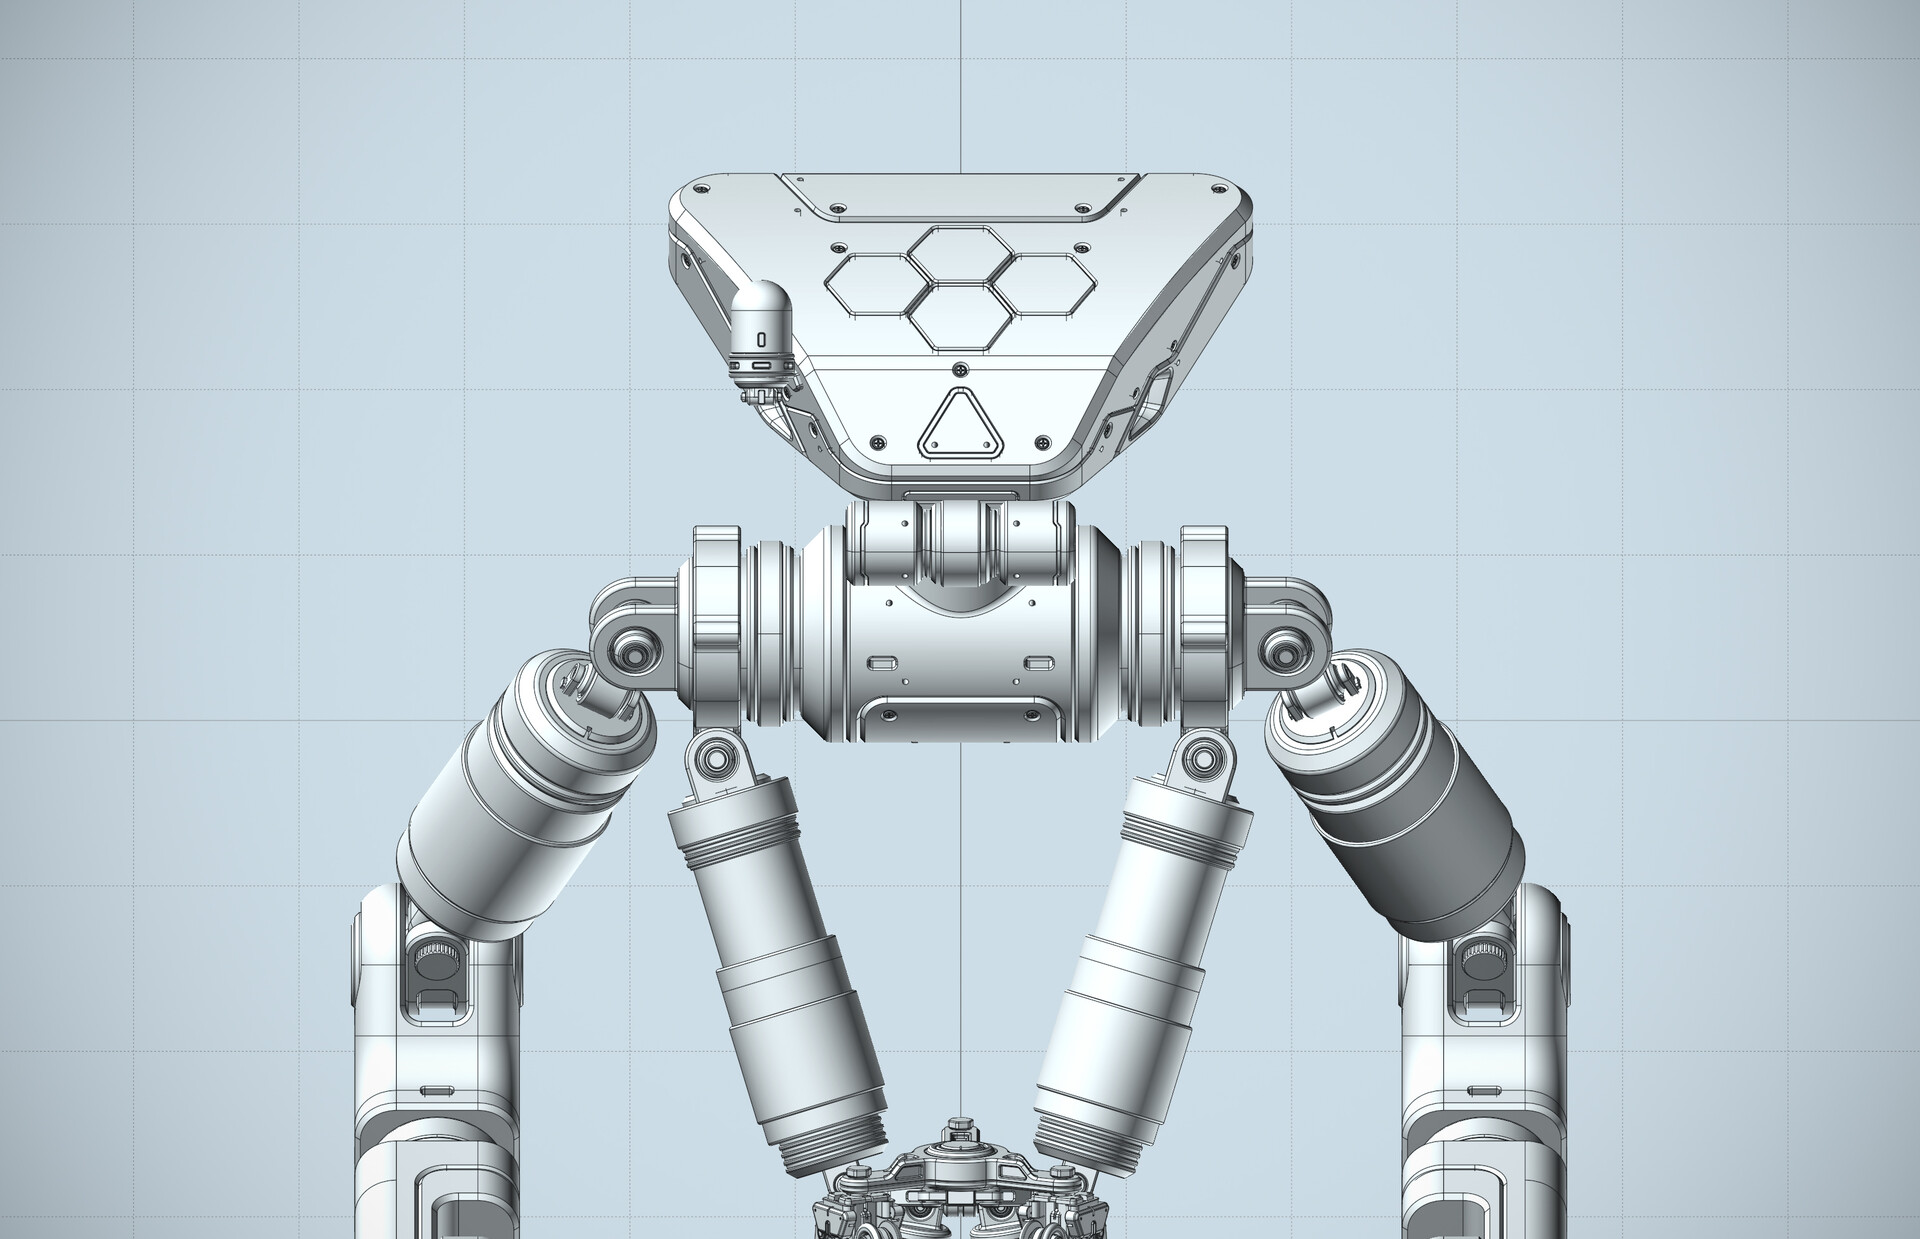 Включи номер робота. Боевой робот номер 4. Робот с боевыми винтами. Конструктивный дизайн робота. Боевой робот номер 4 арты.